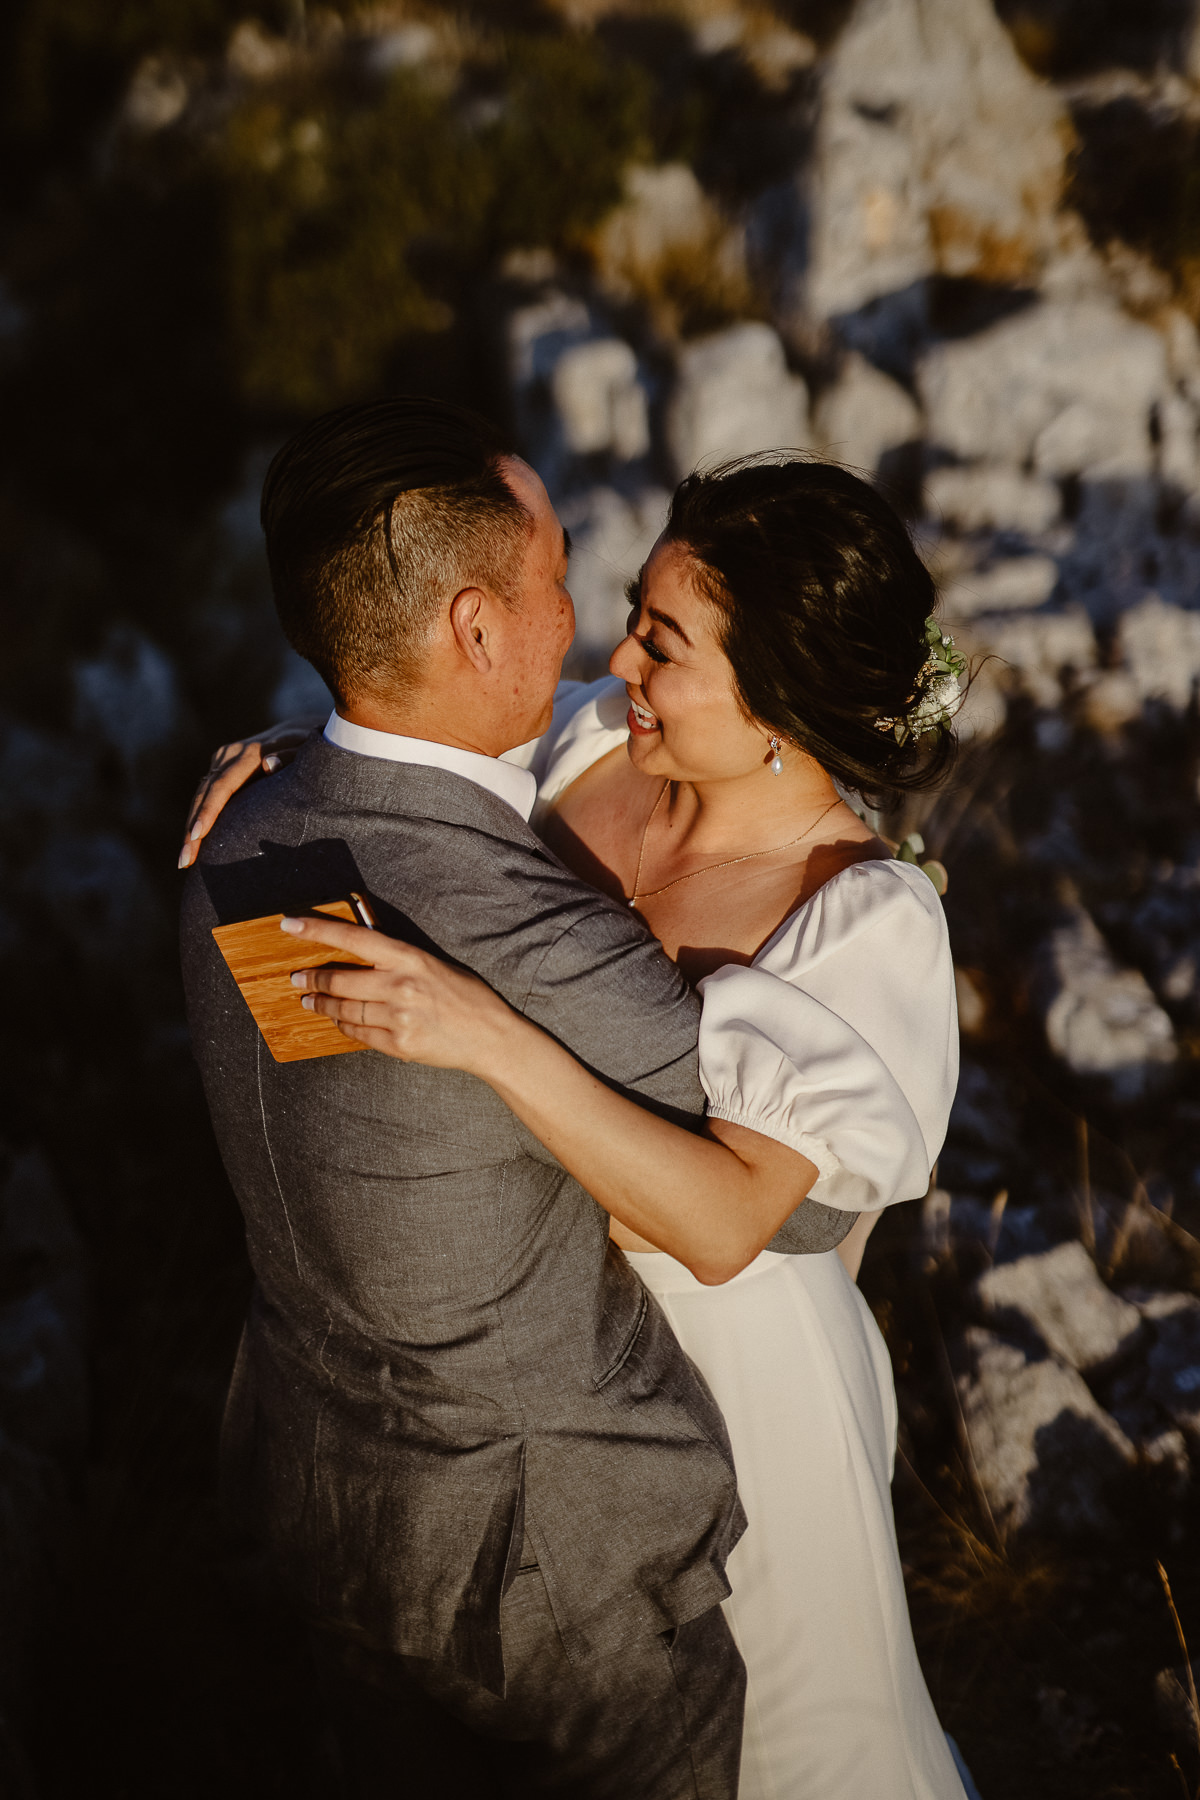 Hvar adventure hikig elopement 91 | Croatia Elopement Photographer and Videographer